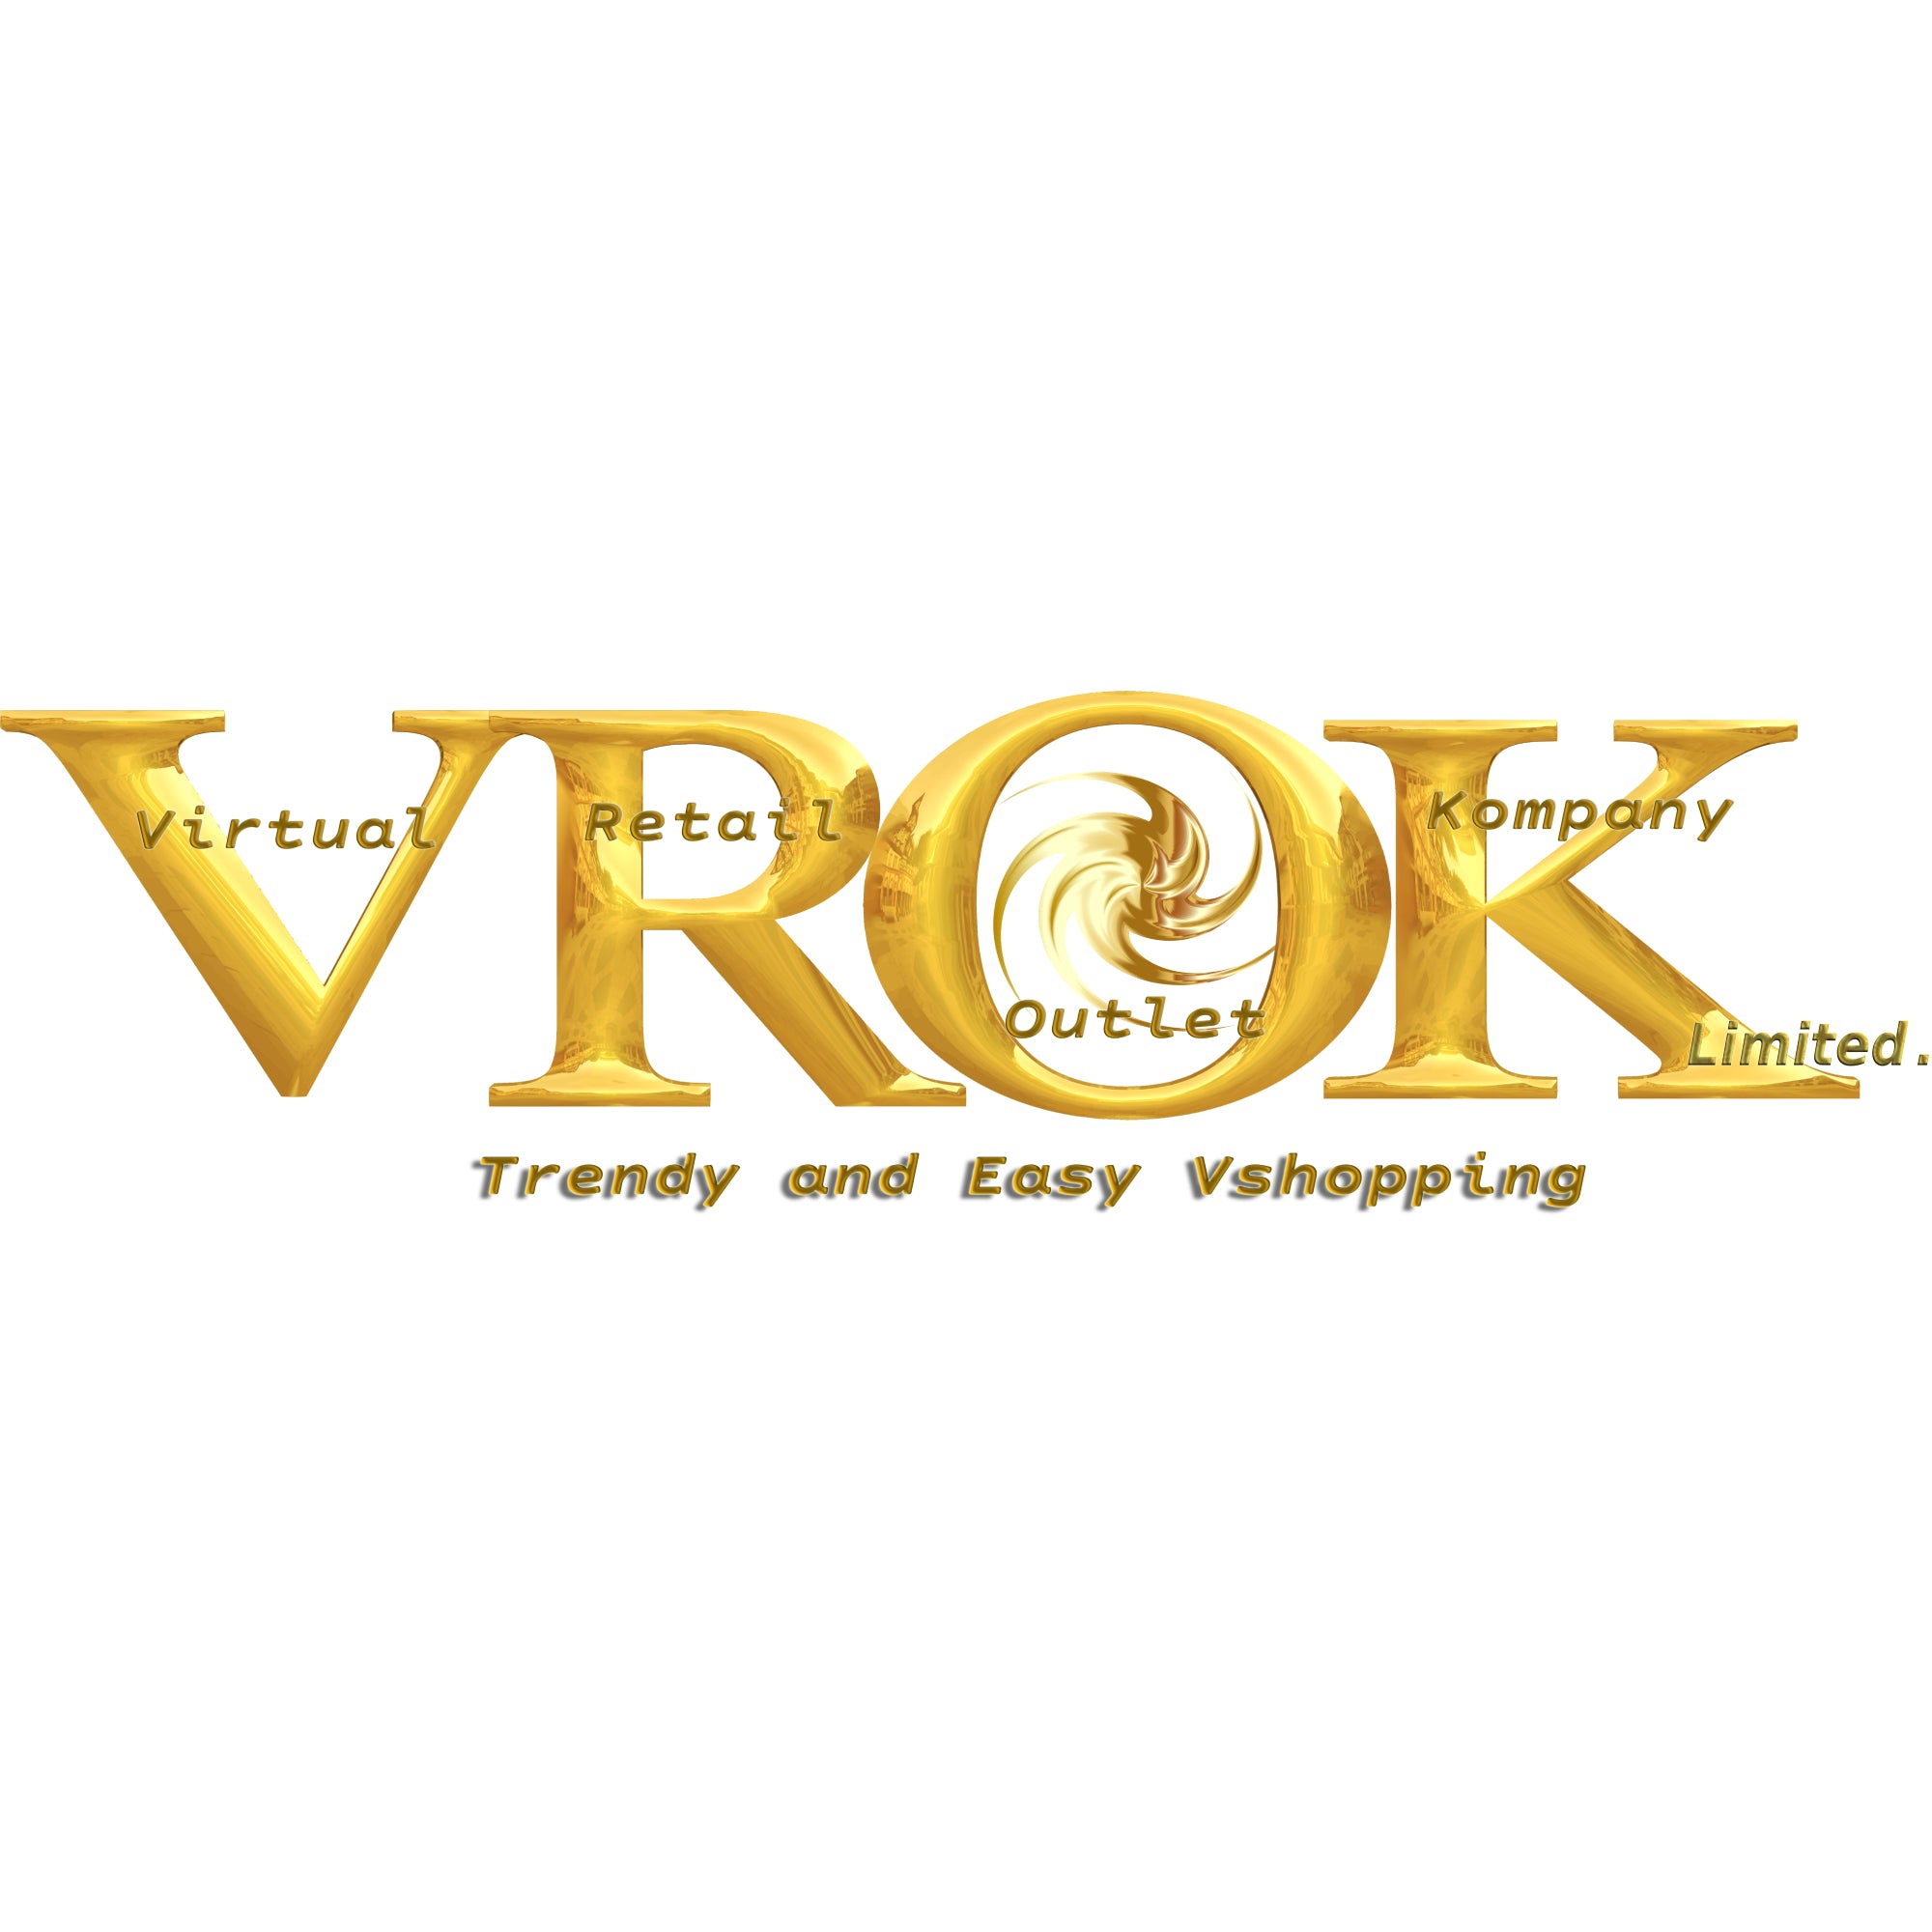 VROK - Virtual Retail Outlet Kompany Limited.